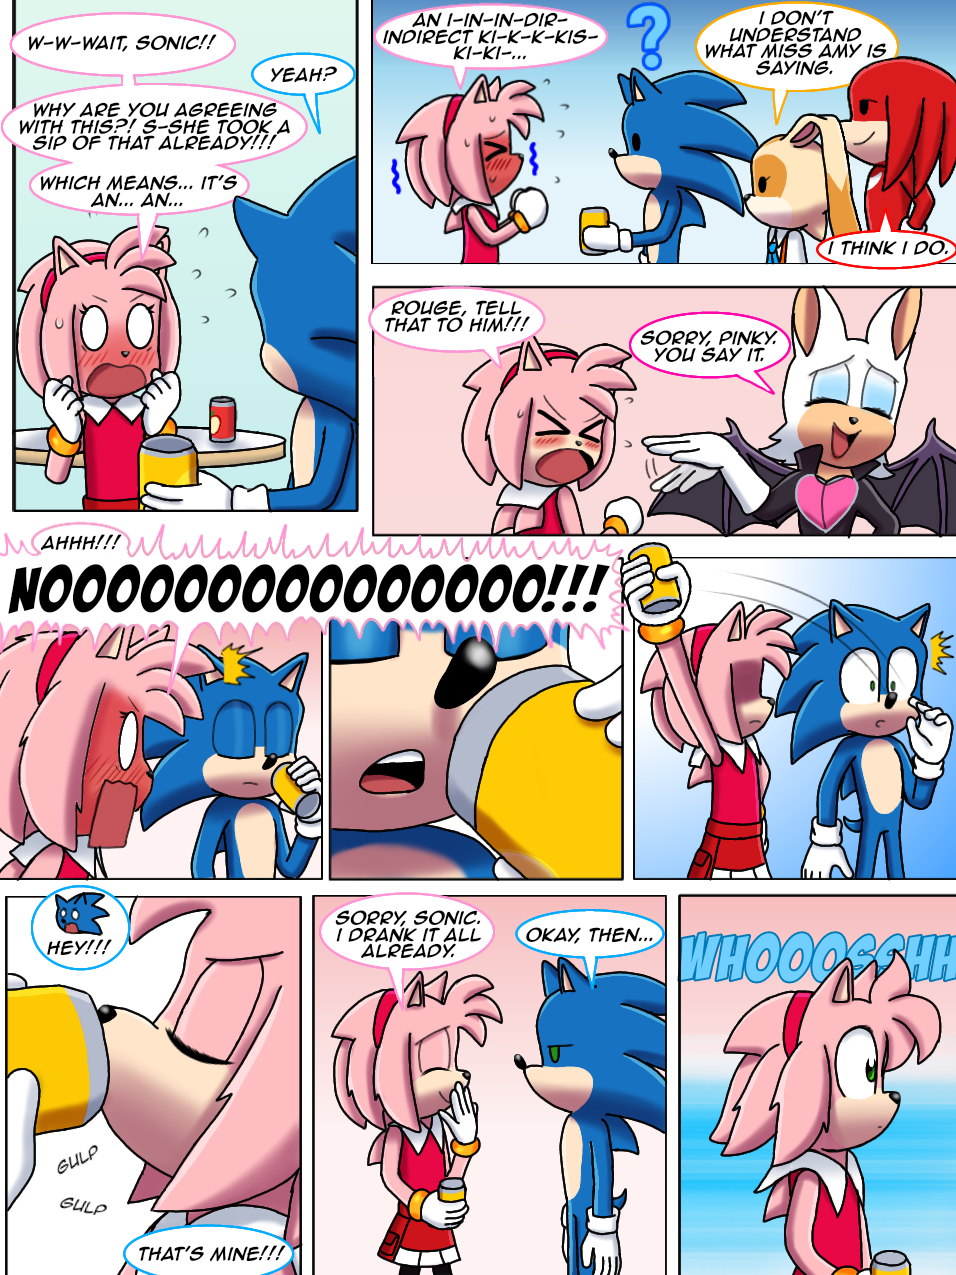 Sonic and Amy FINALLY KISS?! (Sonic Comic Dub) 